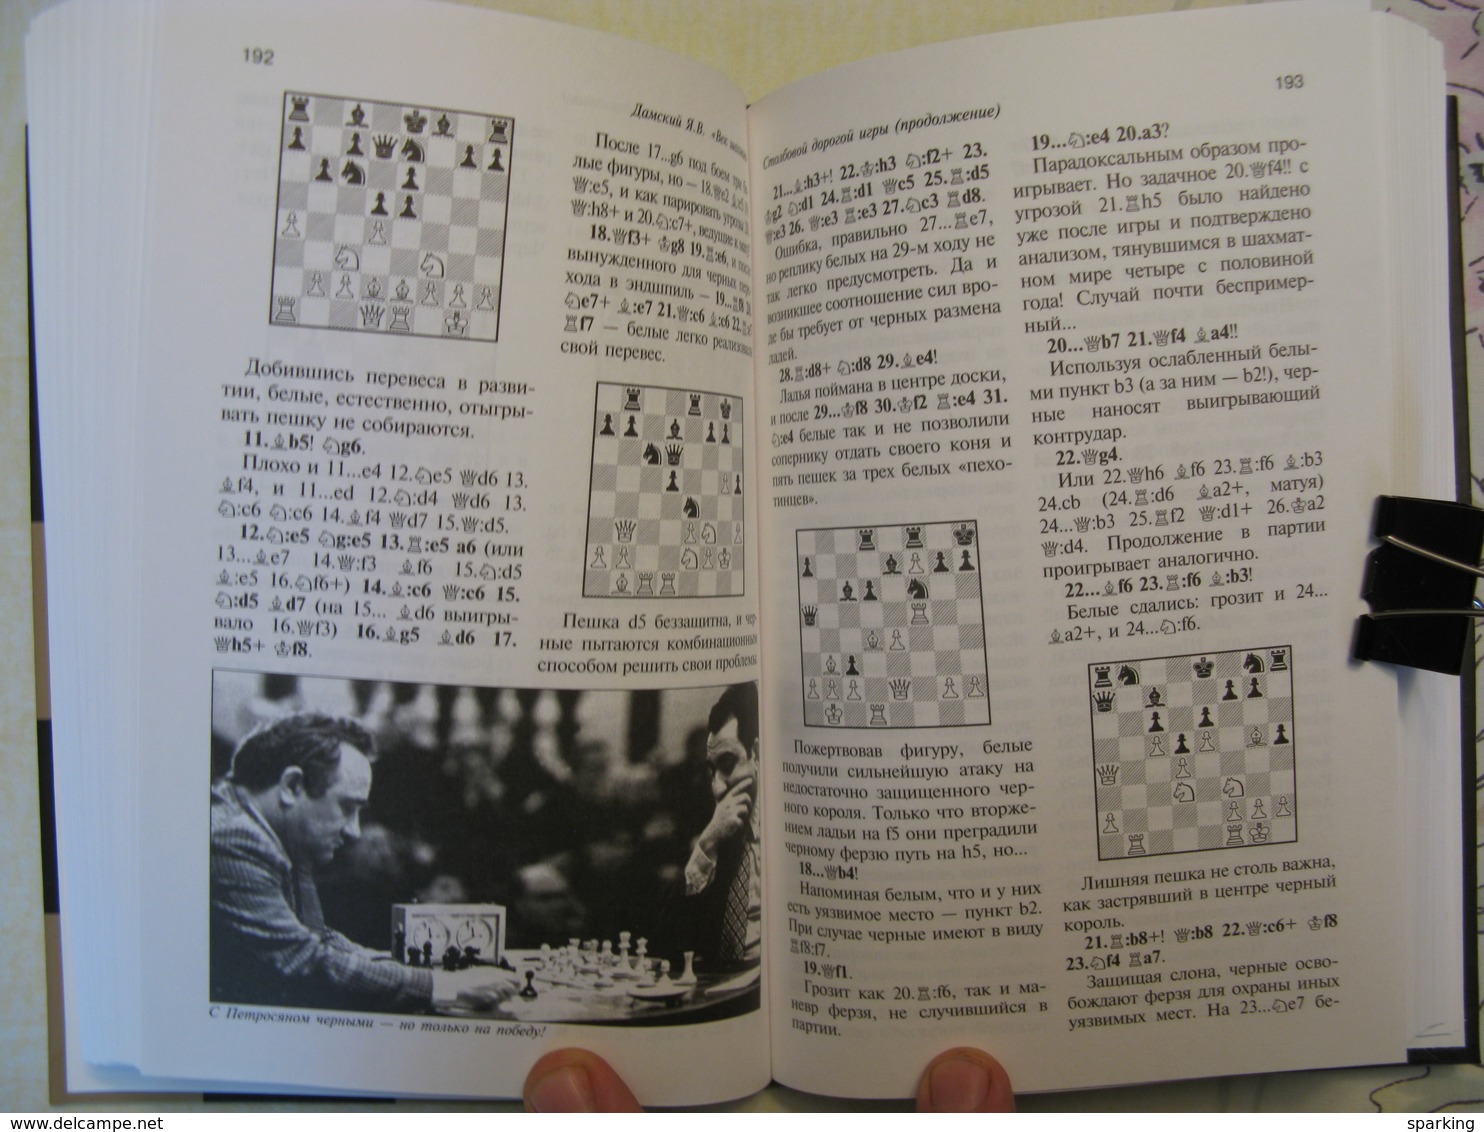 Chess. 2009. Damsky Yakov. A century of chess. Russian book.